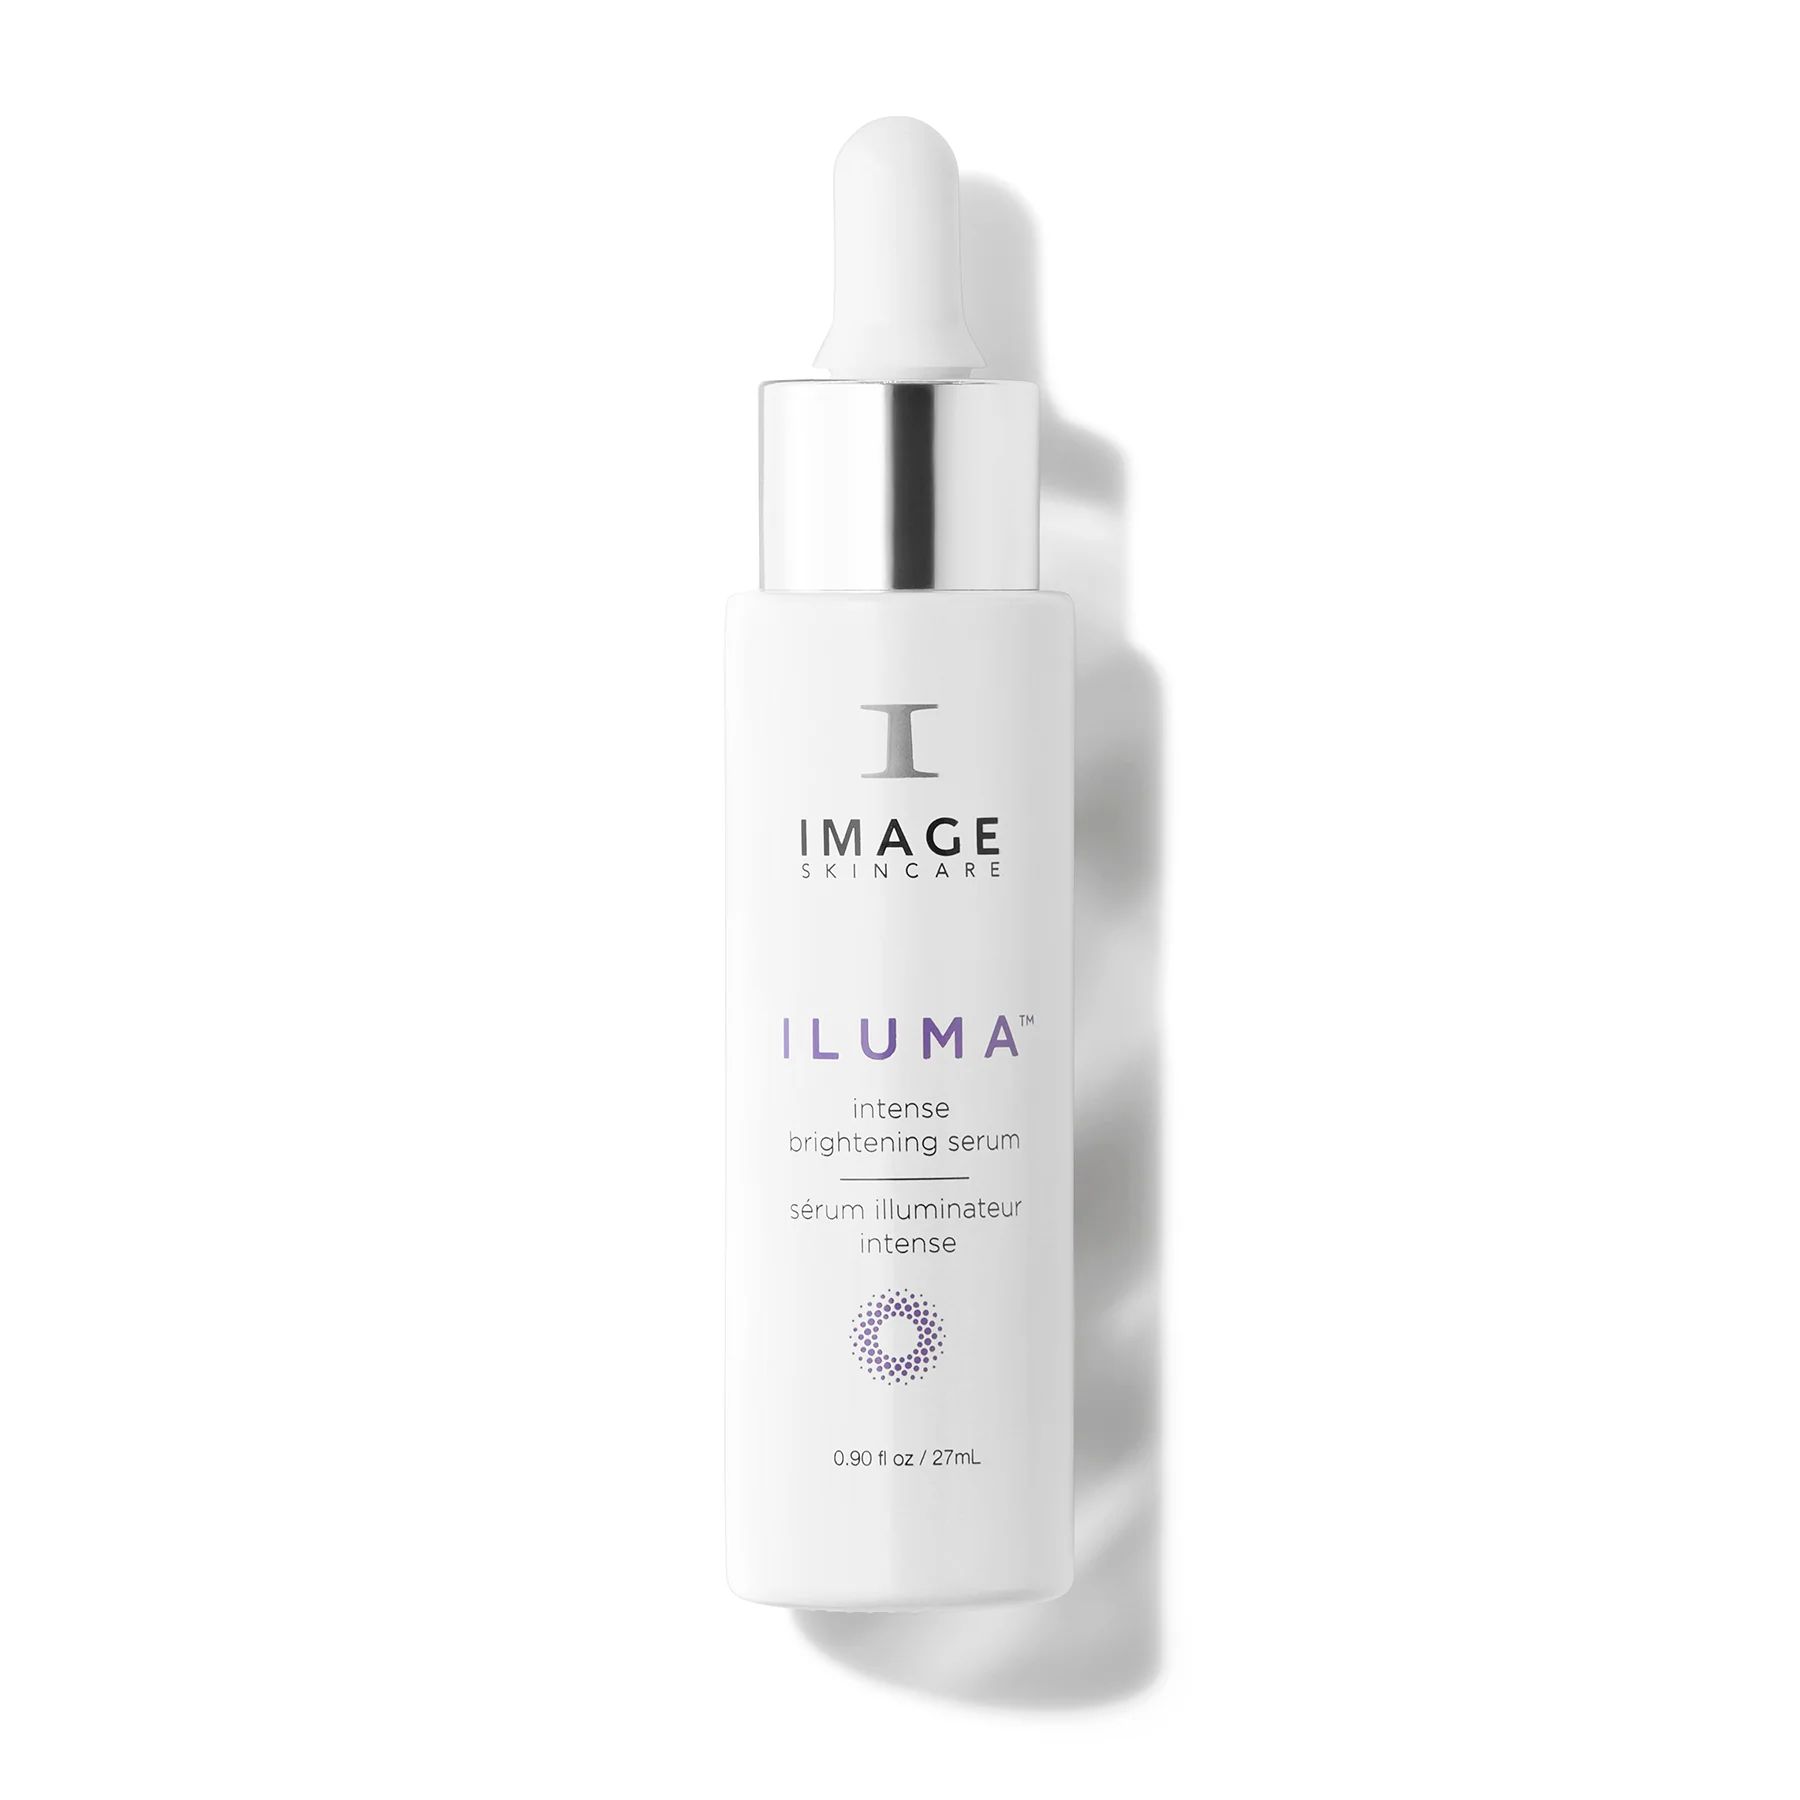 ILUMA® intense brightening serum | Image Skincare